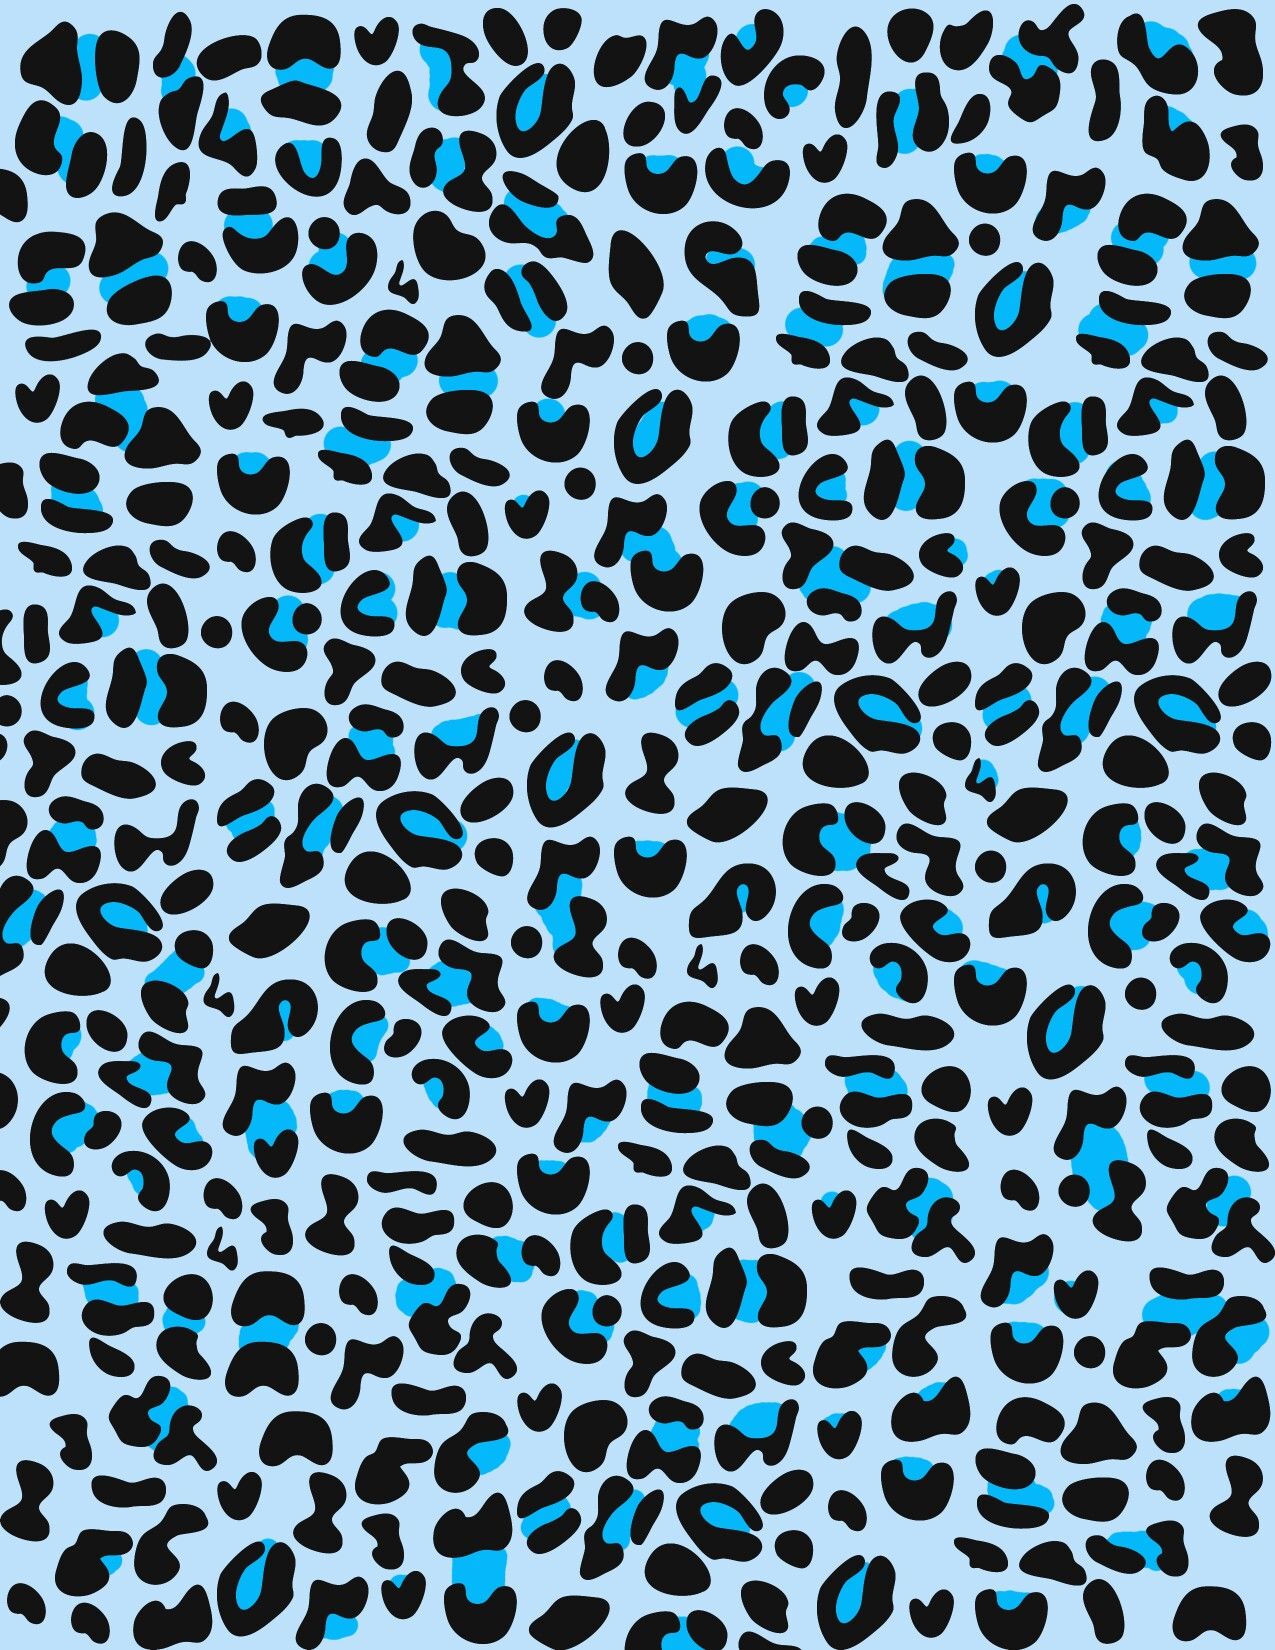 Animal print. Cheetah print wallpaper, Leopard print wallpaper, Animal print background